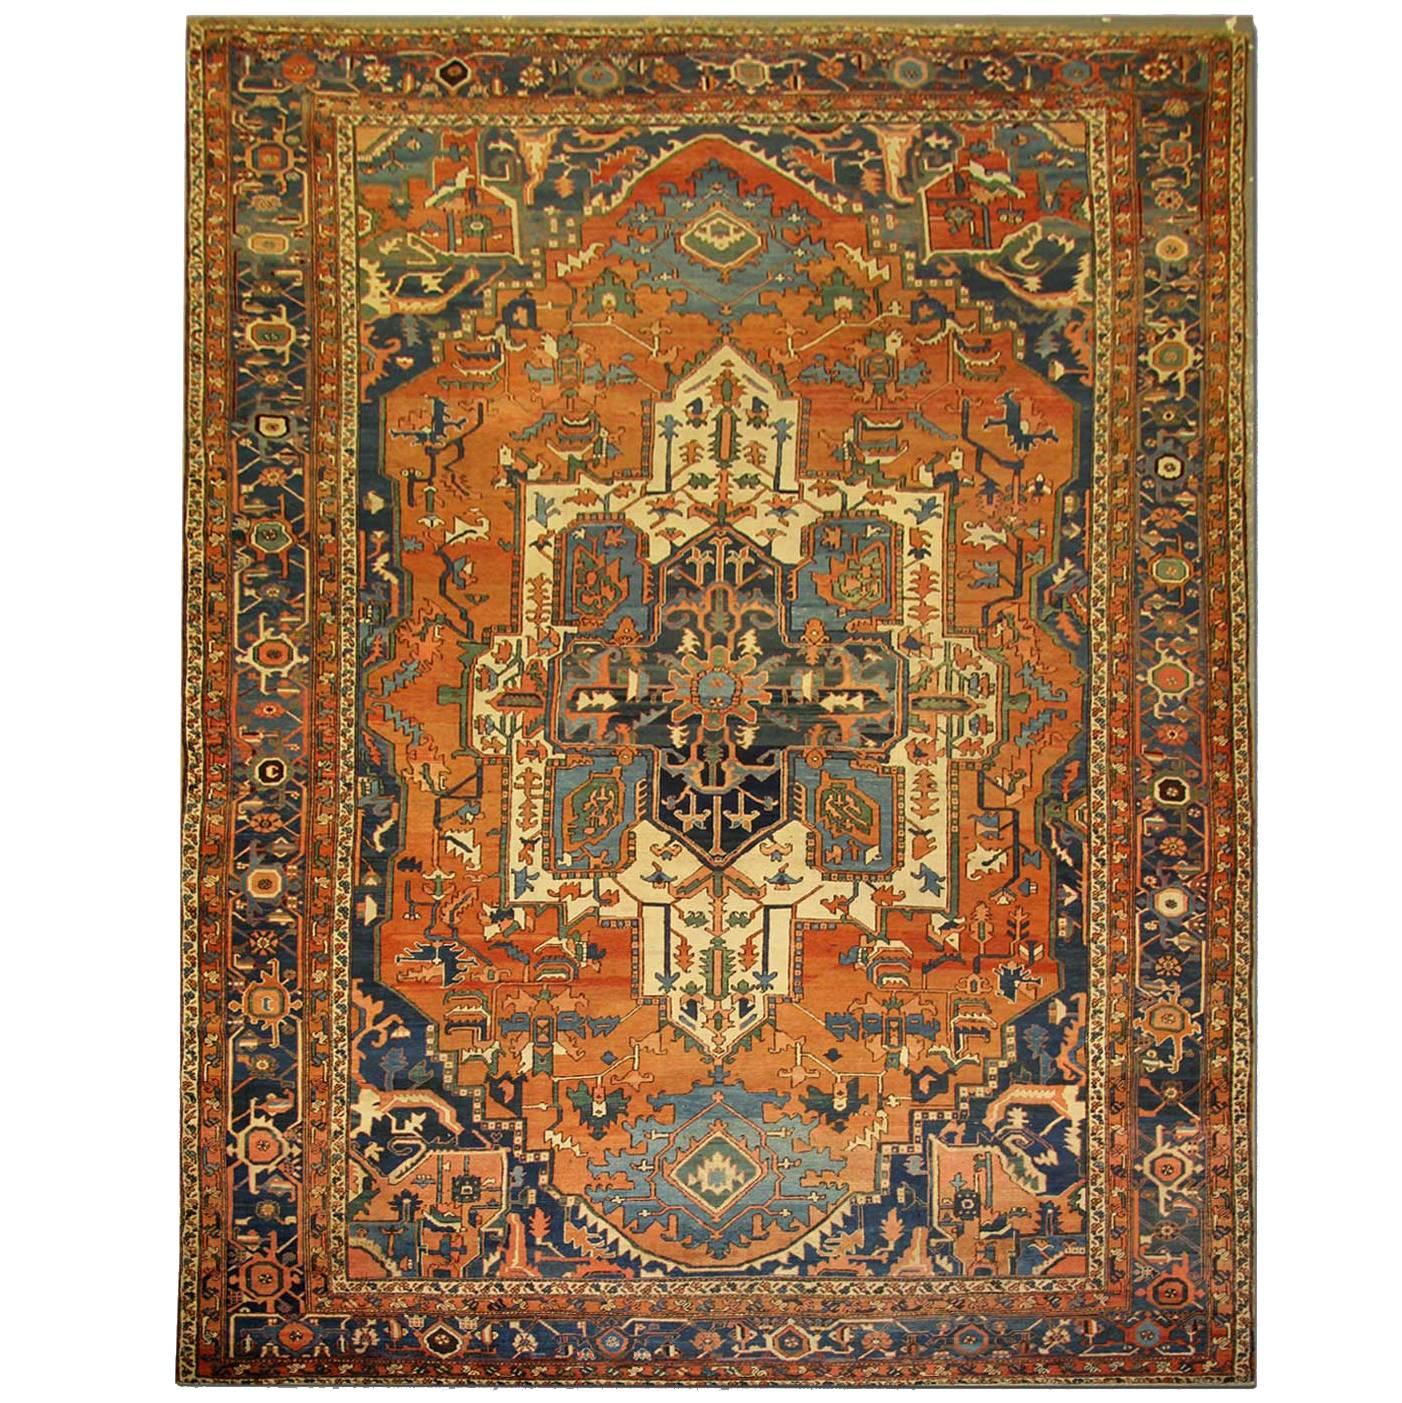 Antique Persian Rugs, Serapi Carpet from Heriz